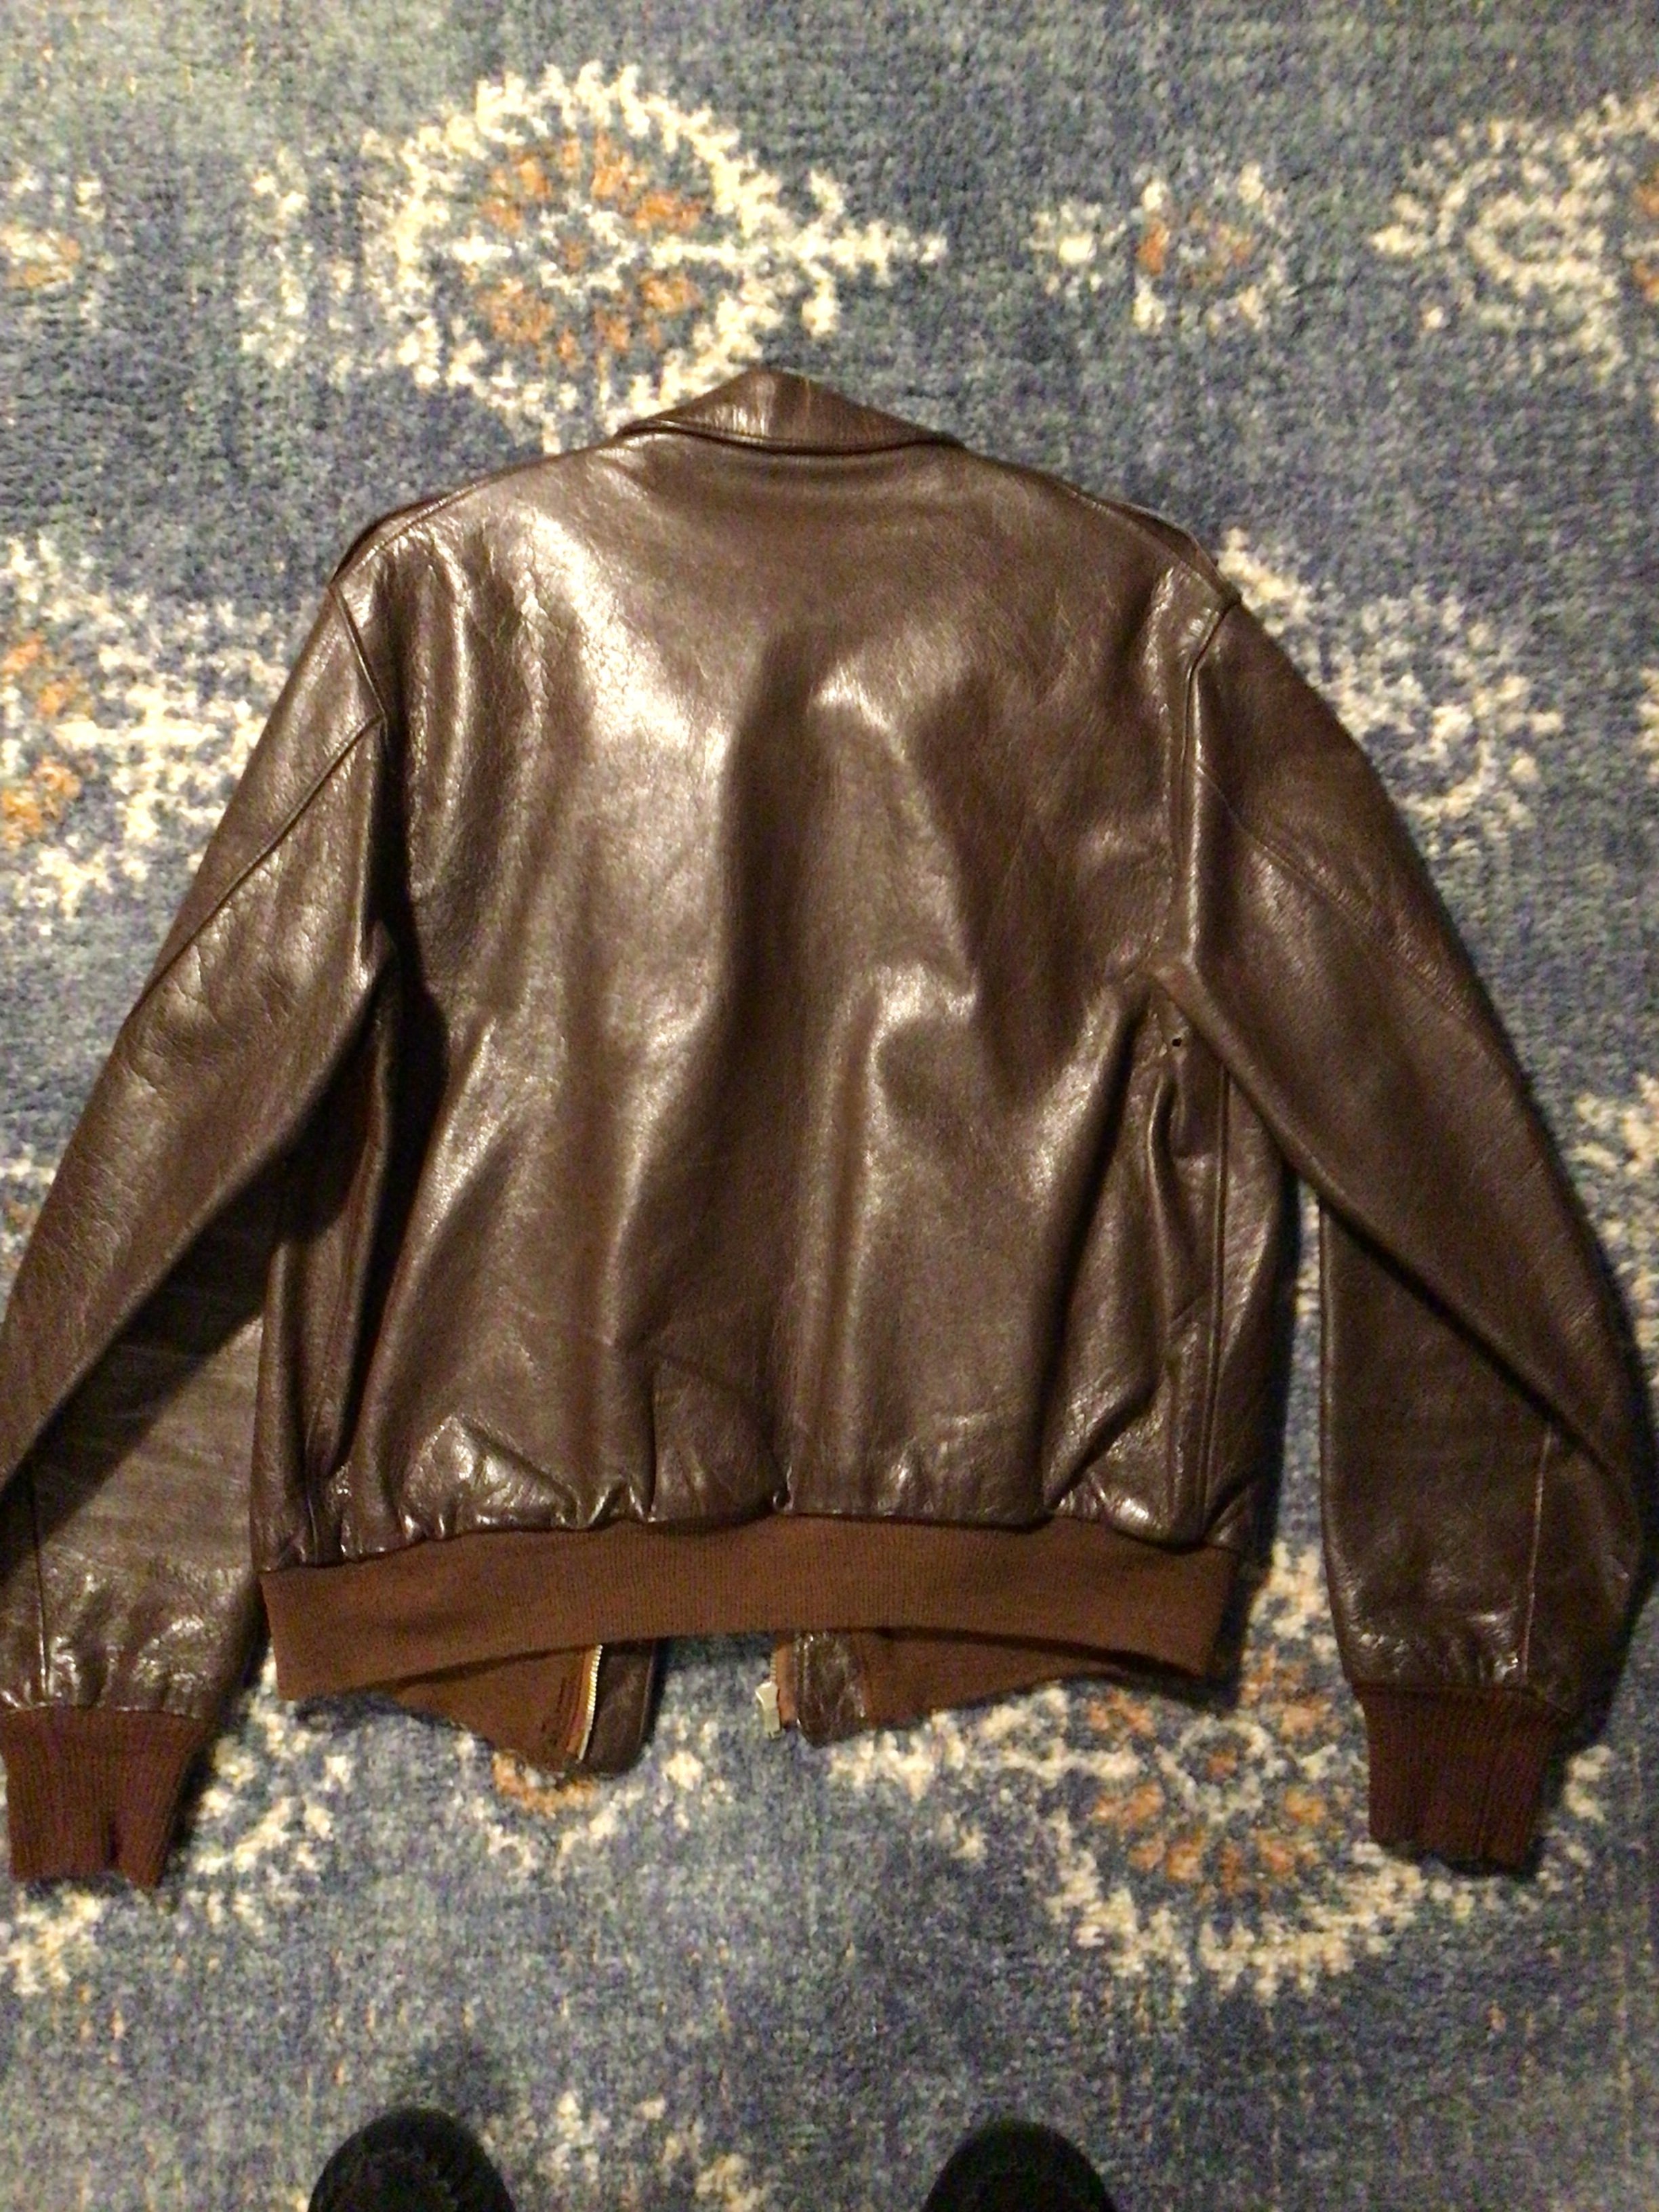 Help me identify grandpa's A2 | Vintage Leather Jackets Forum